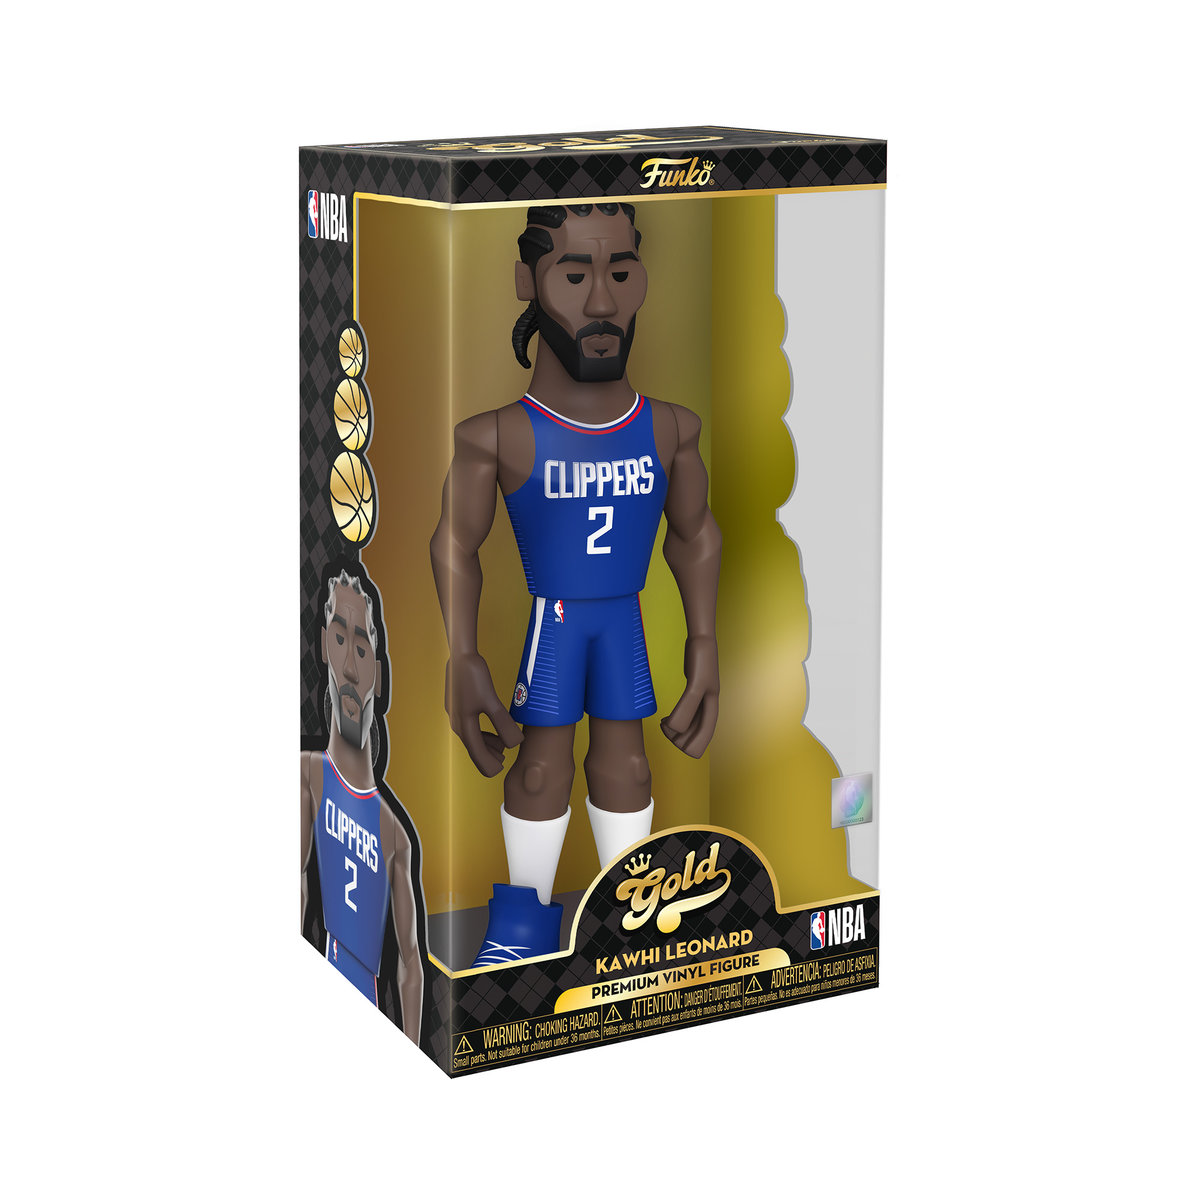 Zdjęcia - Figurka / zabawka transformująca Funko Gold, figurka kolekcjonerska, NBA, Clippers Kawhi Leonard, 12' 